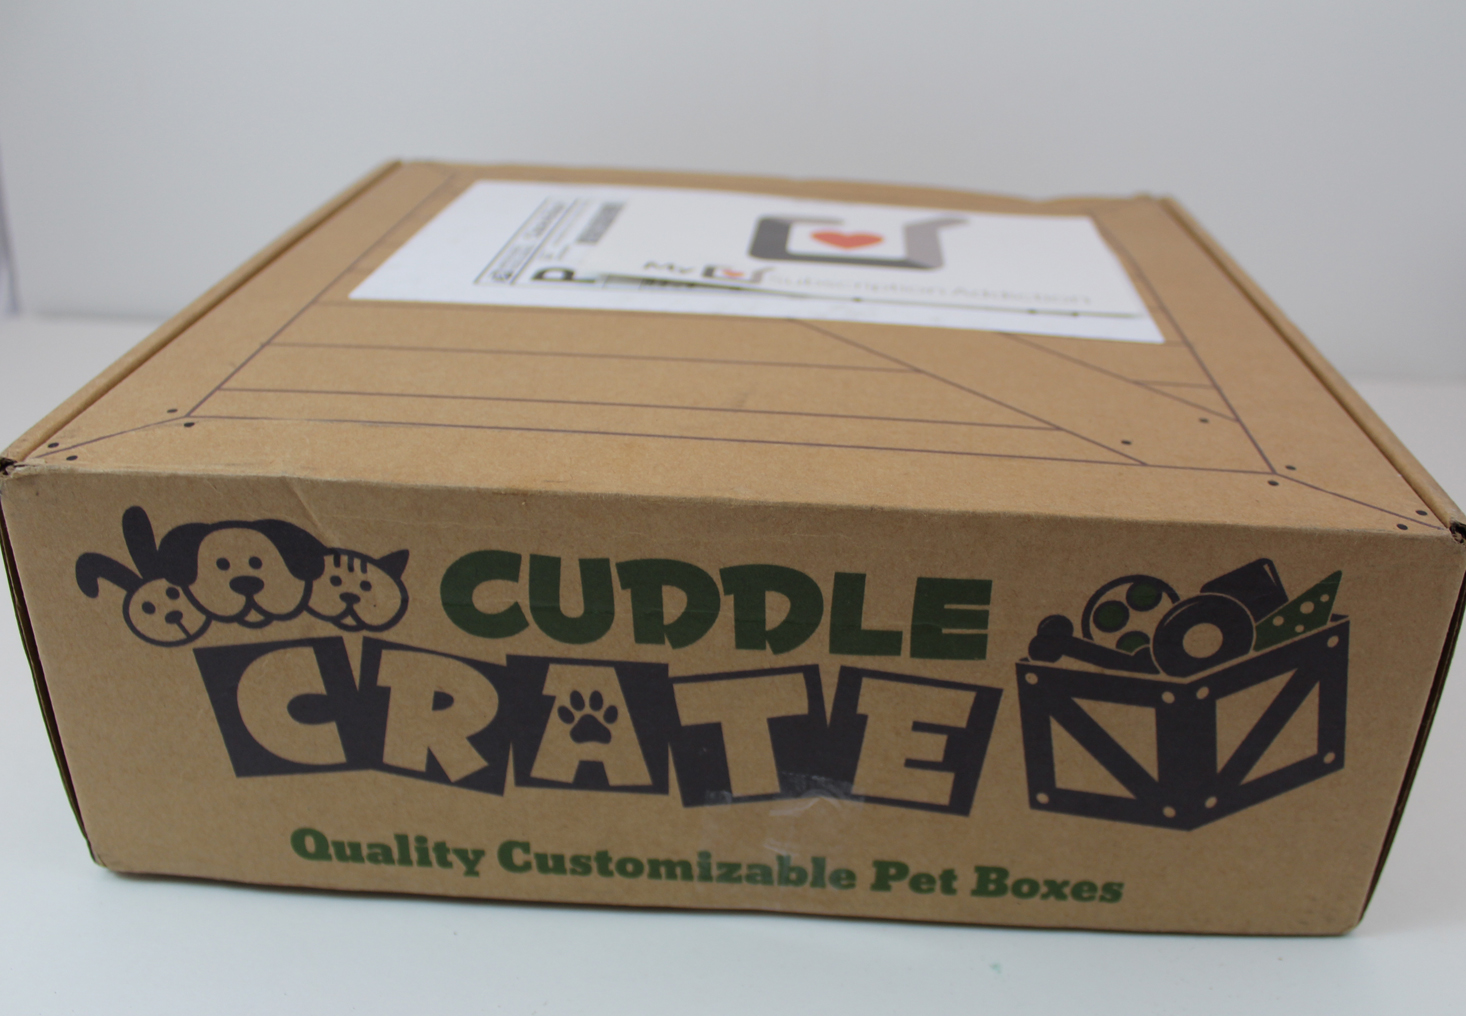 Cuddle Crate Cat Box Review + Coupon – November 2017